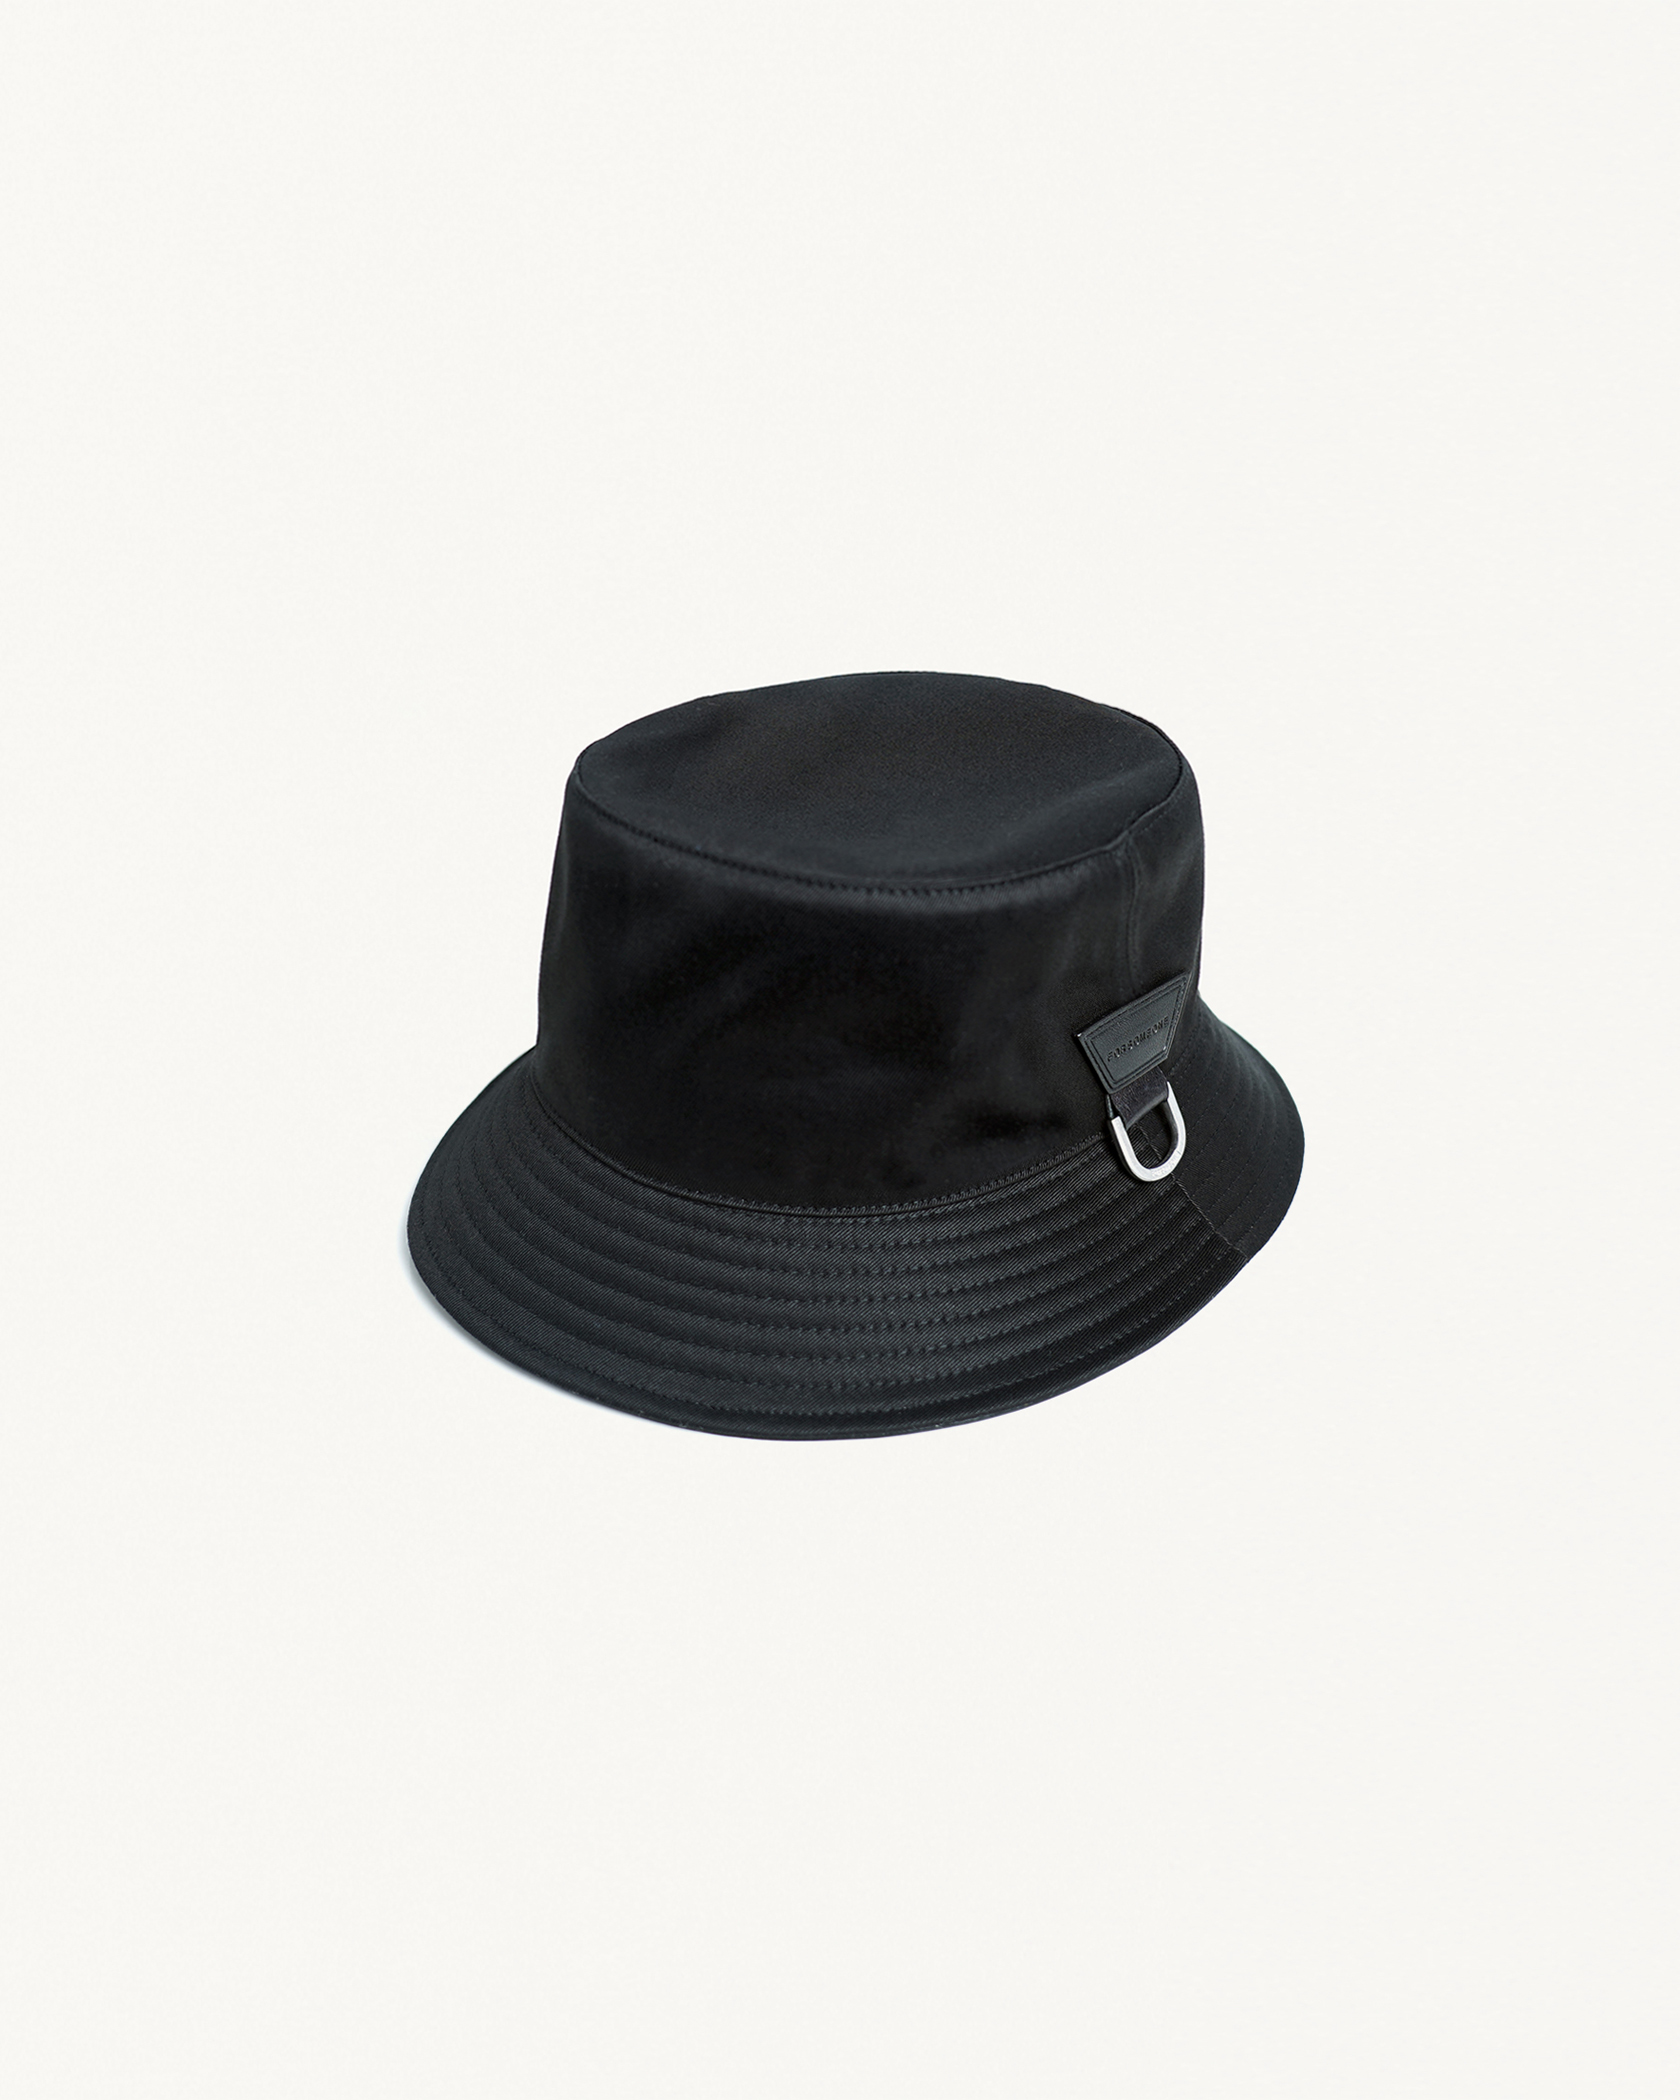 COTTON MOUNT HAT 2.0 詳細画像 Black x Black 1